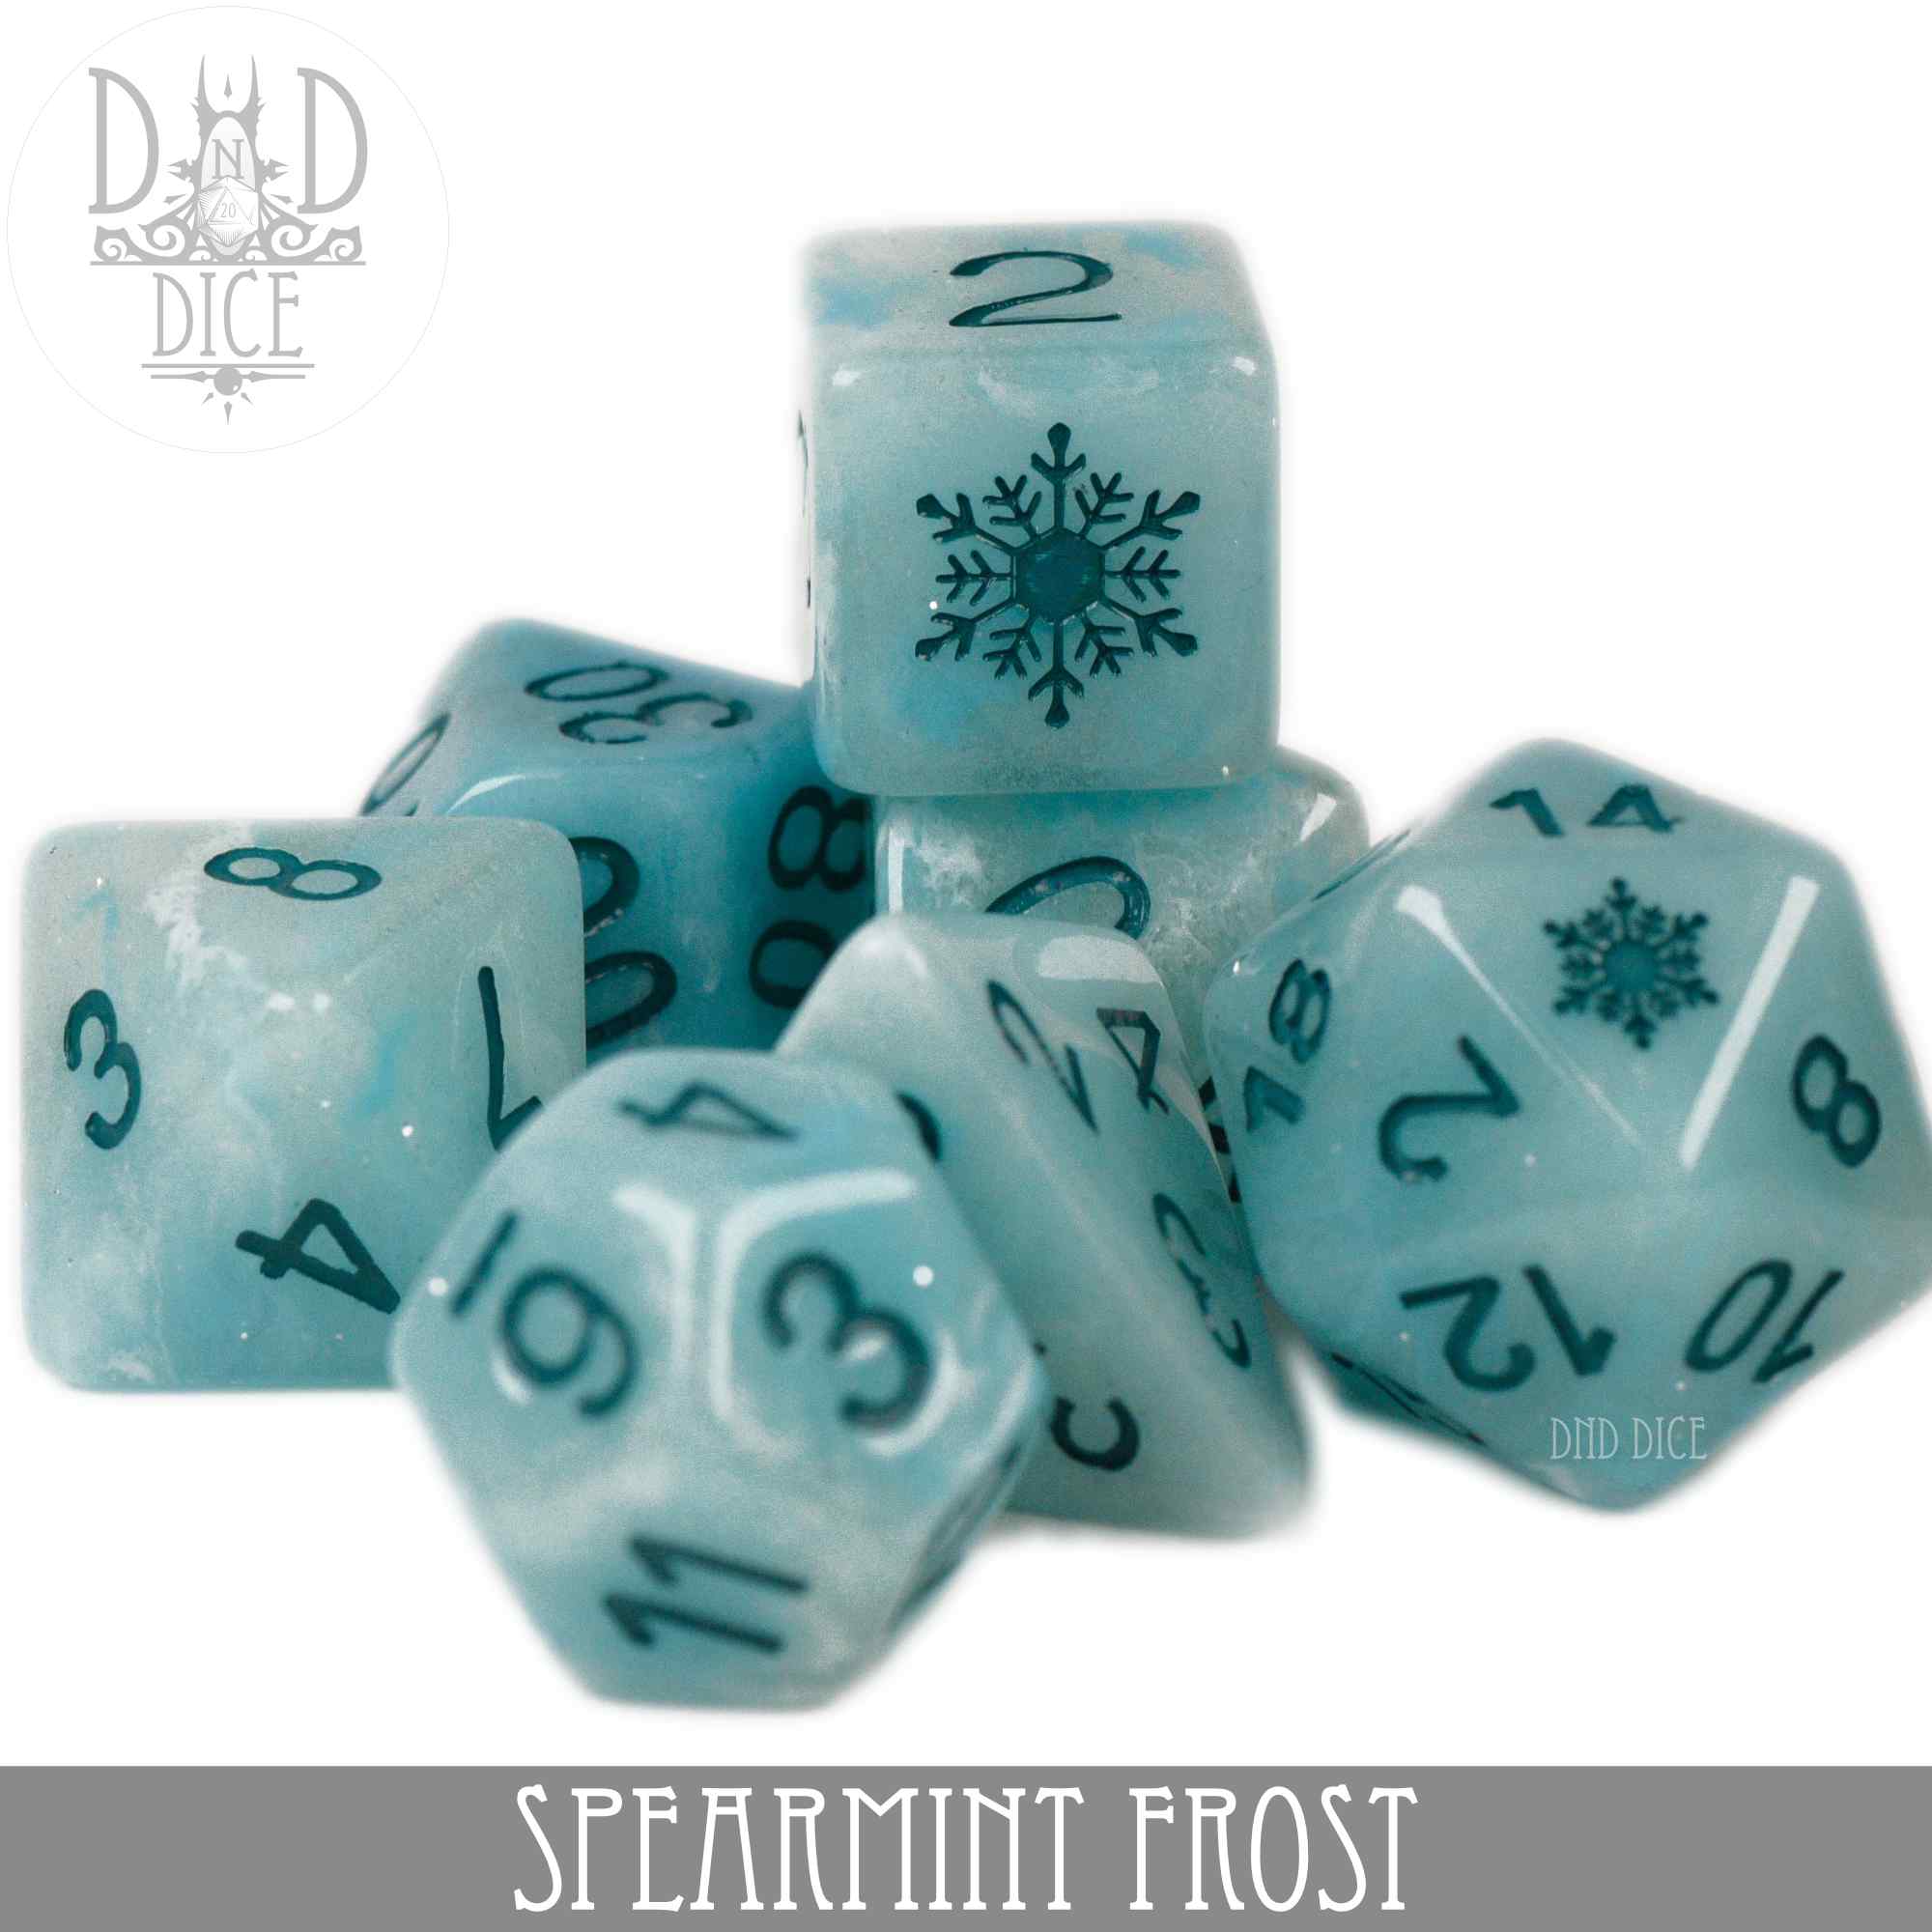 Spearmint Frost Dice Set